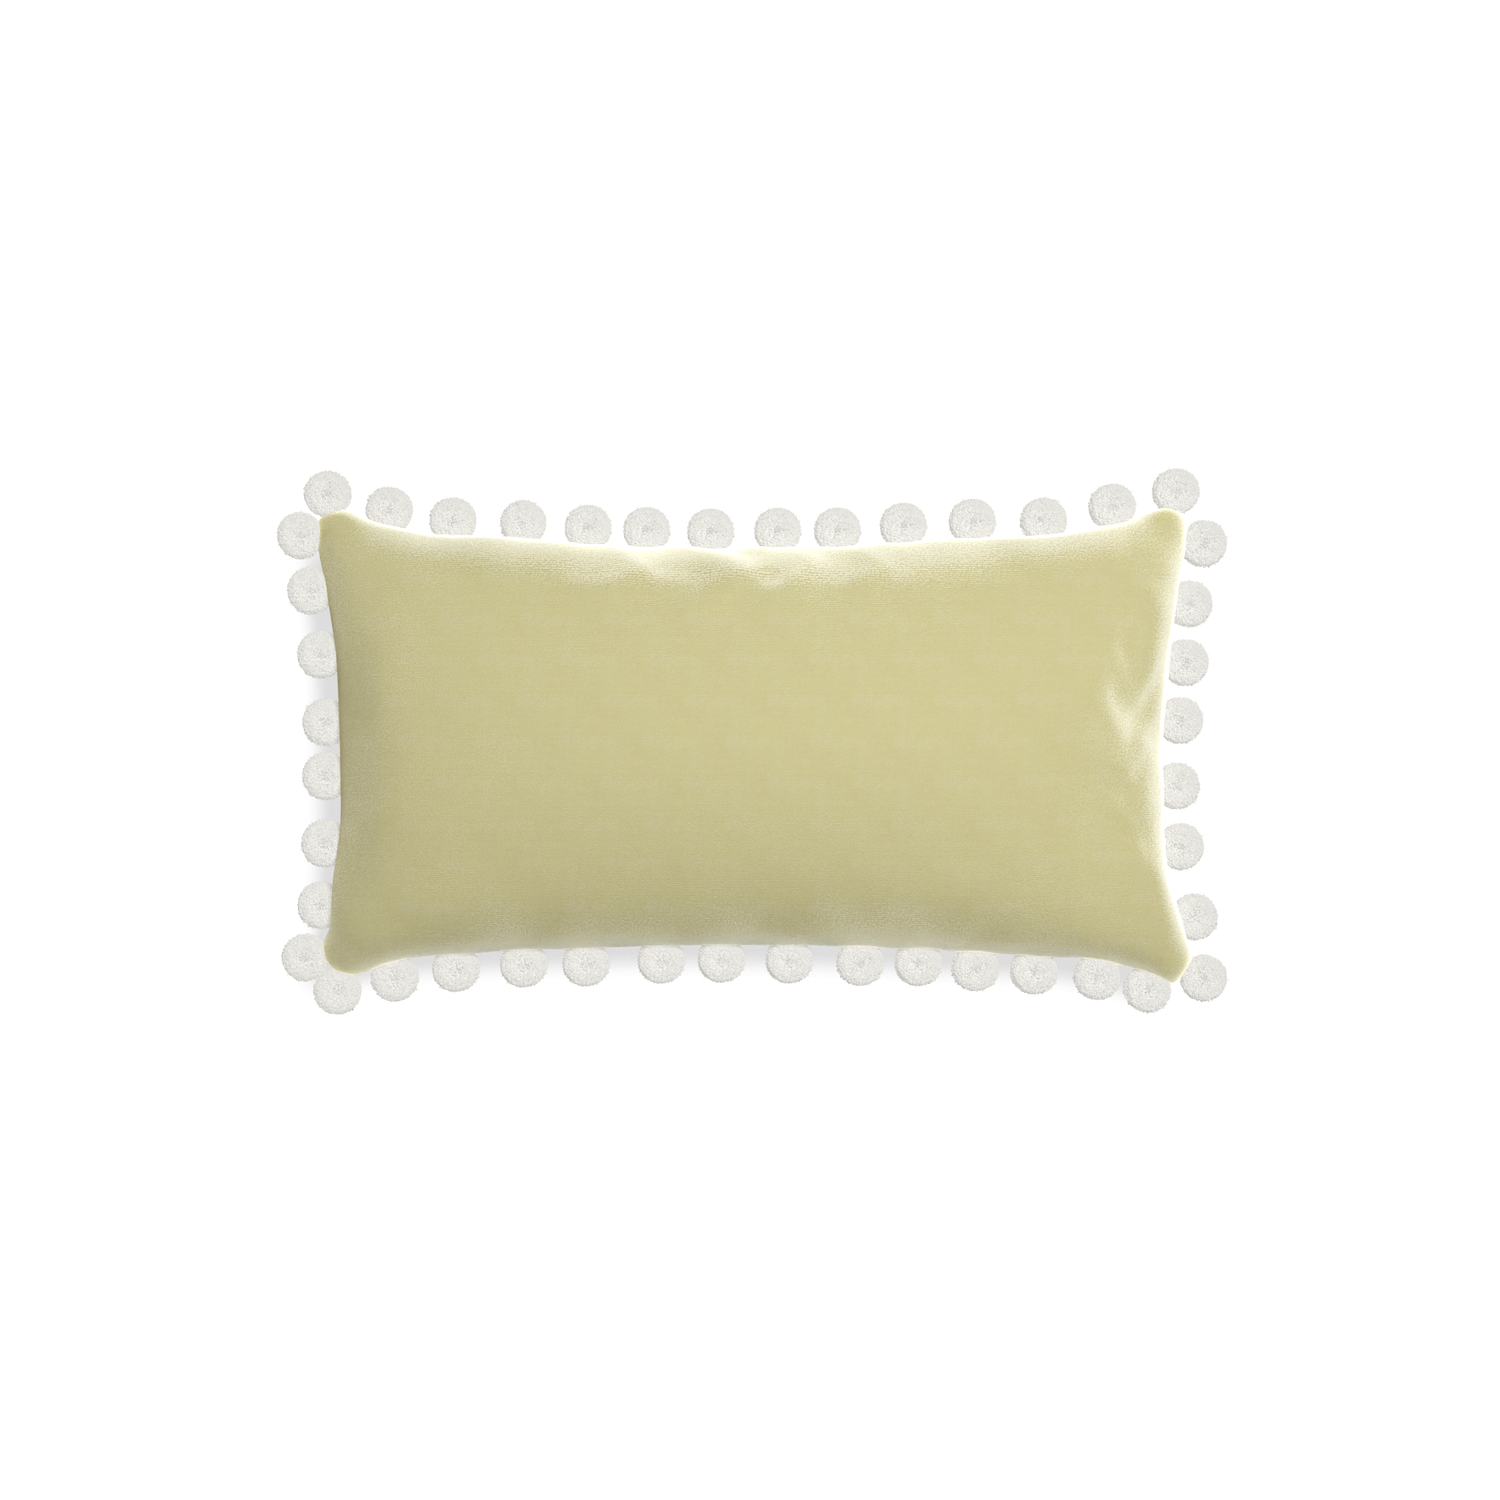 rectangle light green pillow with white pom poms